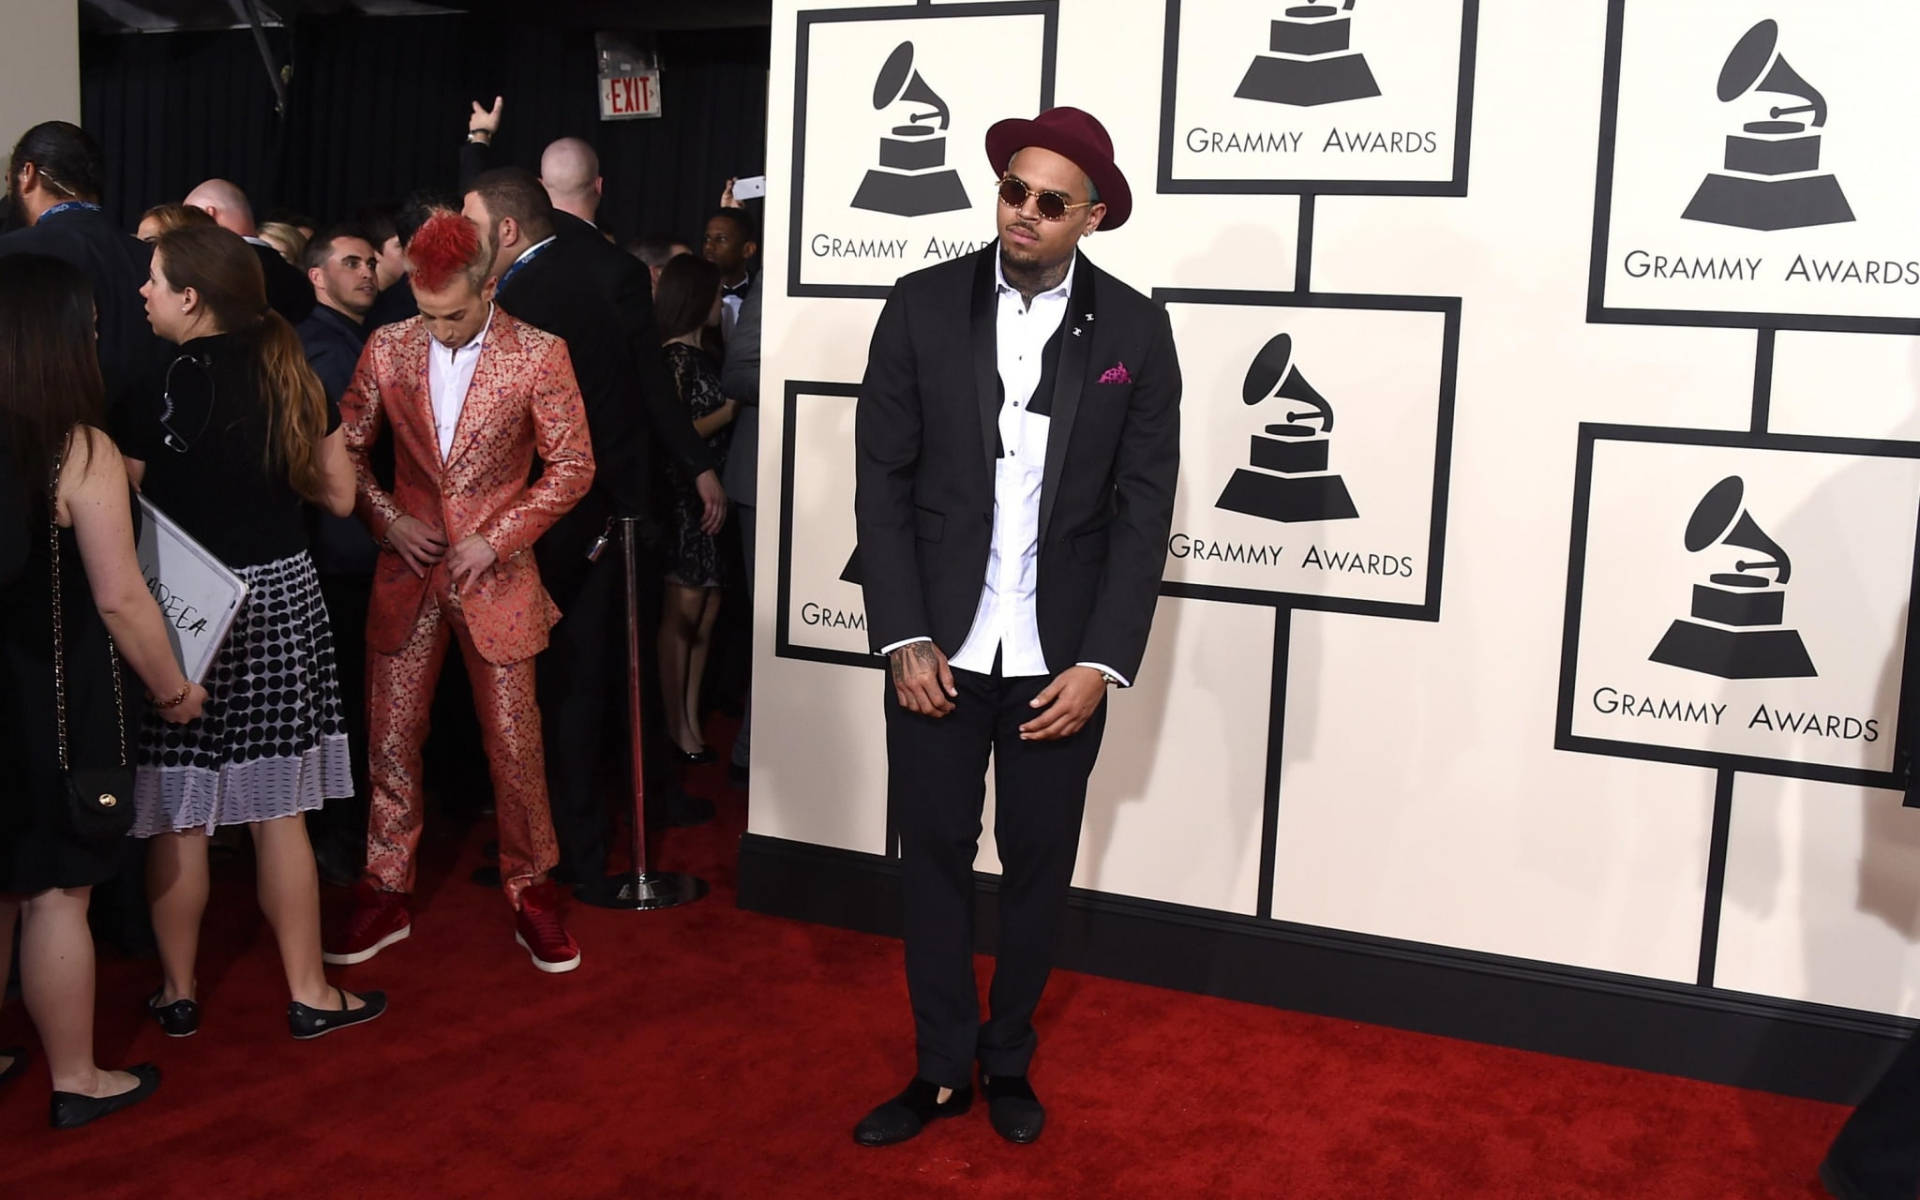 Chris Brown In Grammy Awards Background